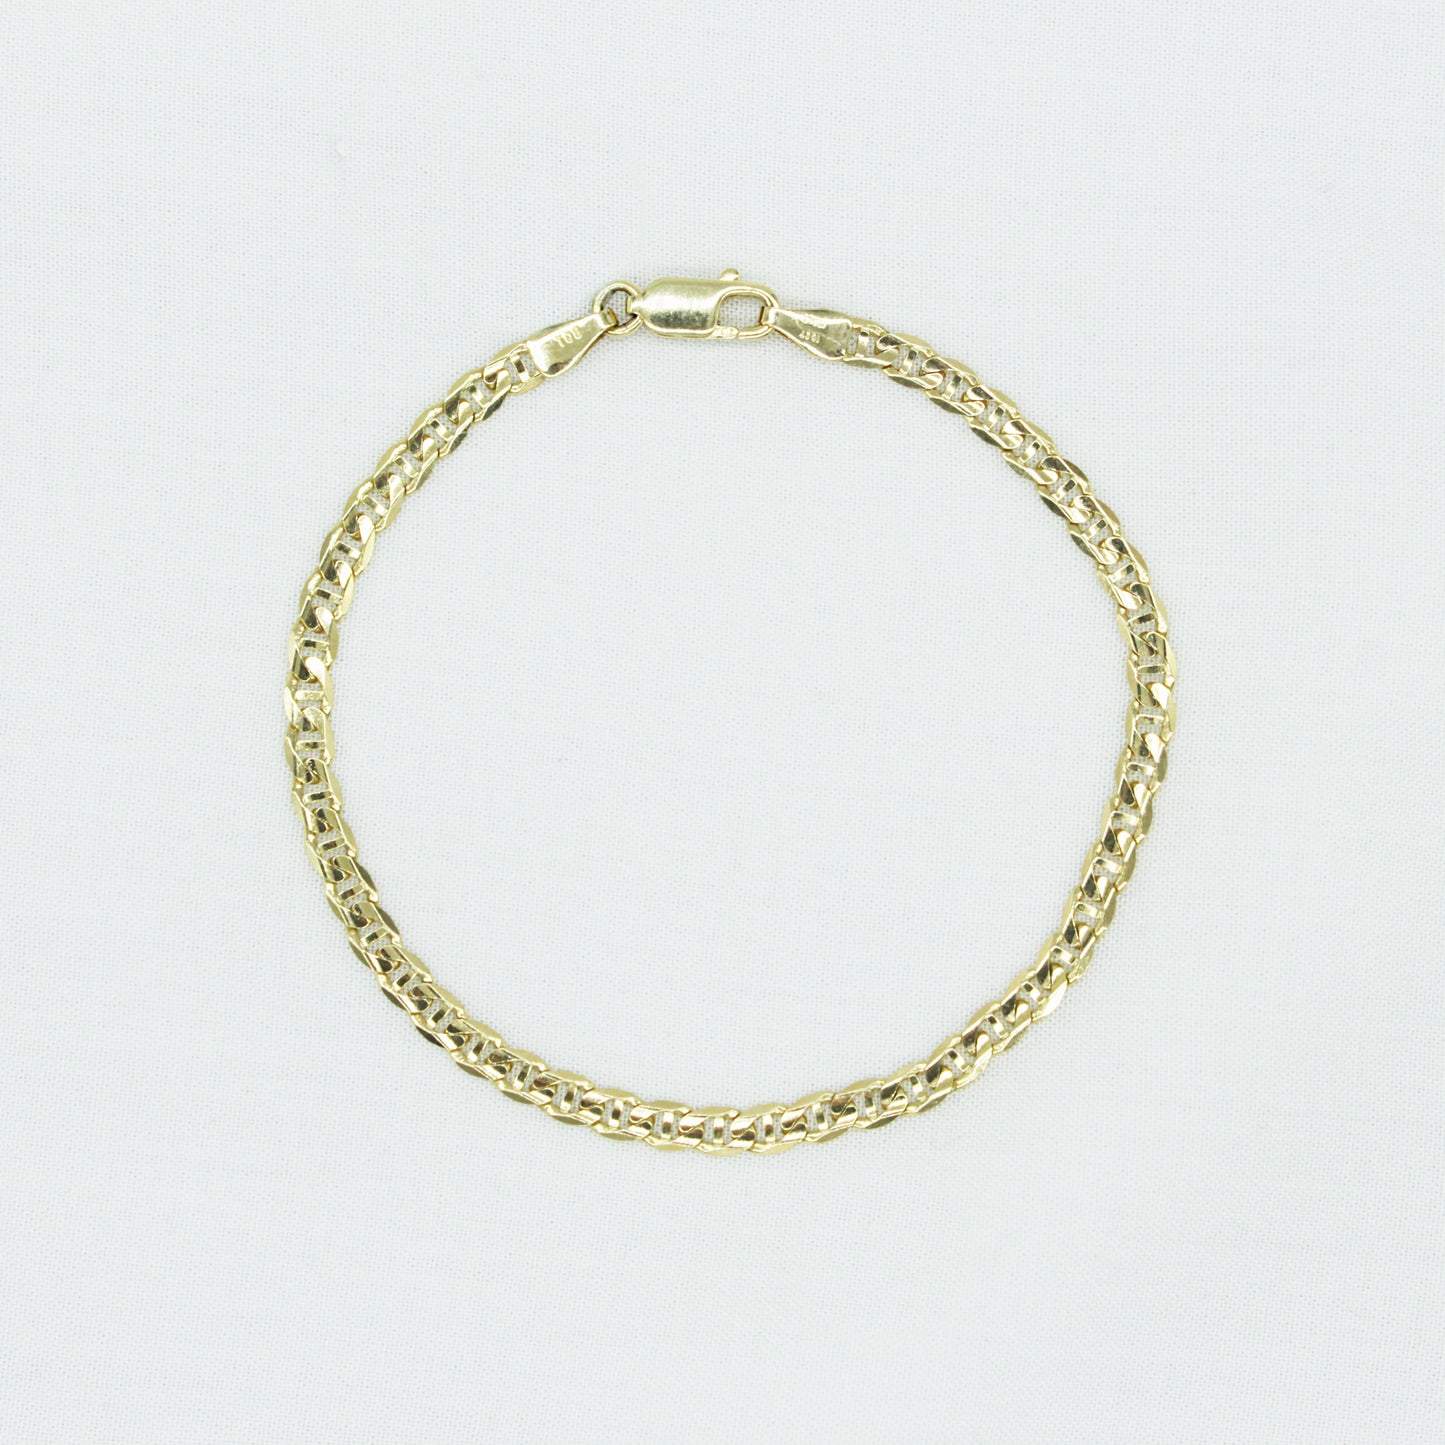 Gucci Link Bracelet in 10K (3.7mm x 0.8mm)